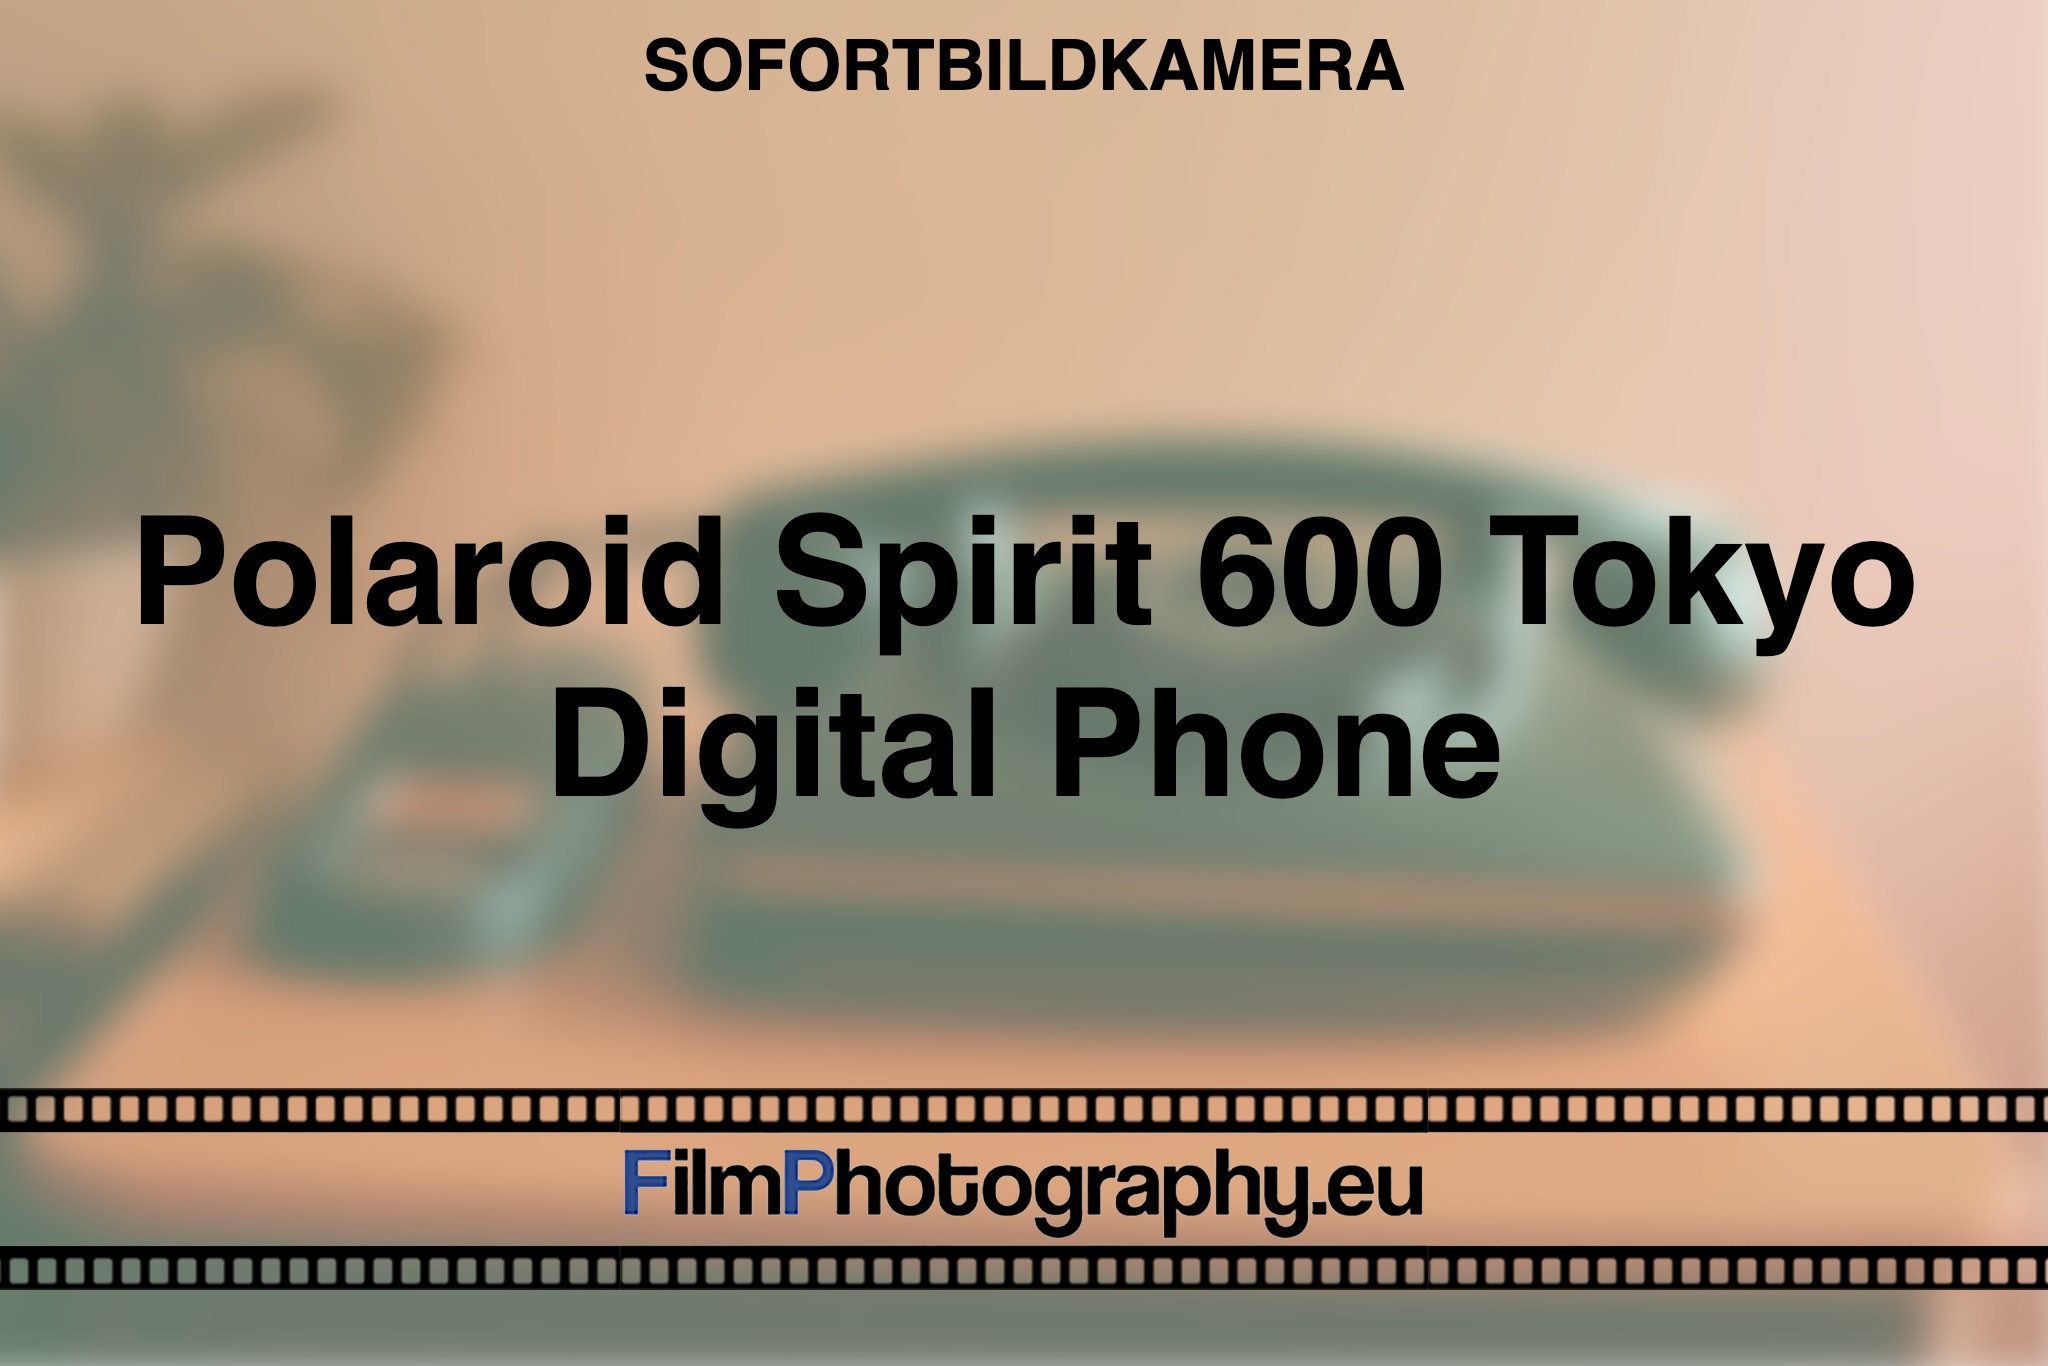 polaroid-spirit-600-tokyo-digital-phone-sofortbildkamera-fp-bnv